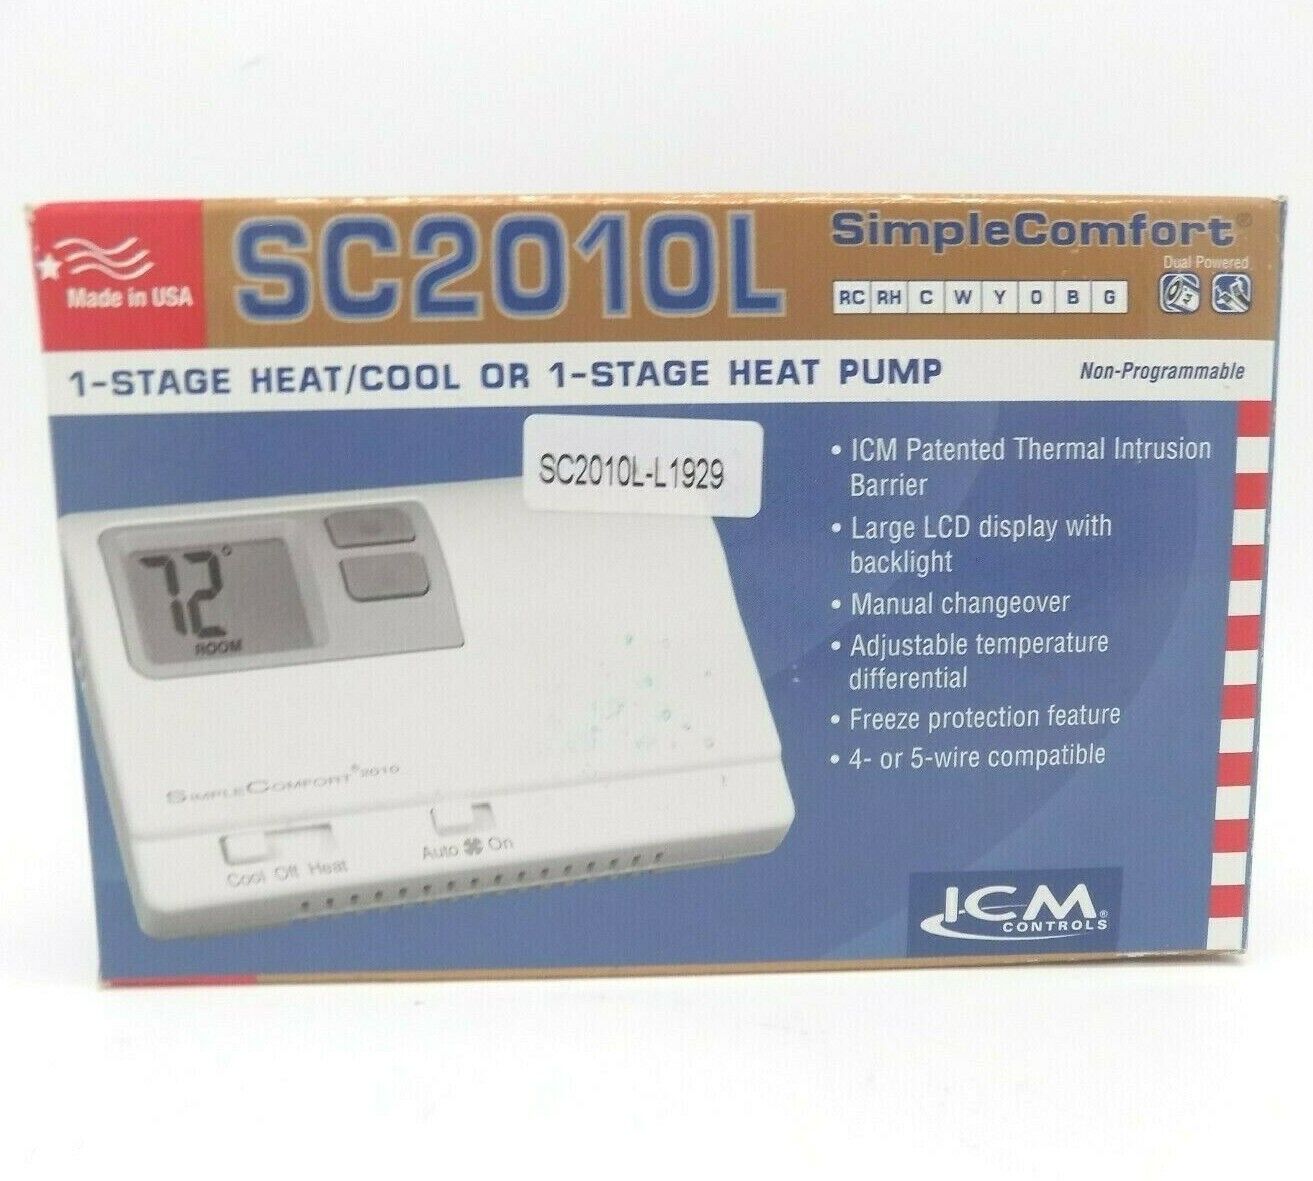 SC2010L ICM Simple Comfort Wall Furnace Thermostat Heat/Cool Heat Pump 